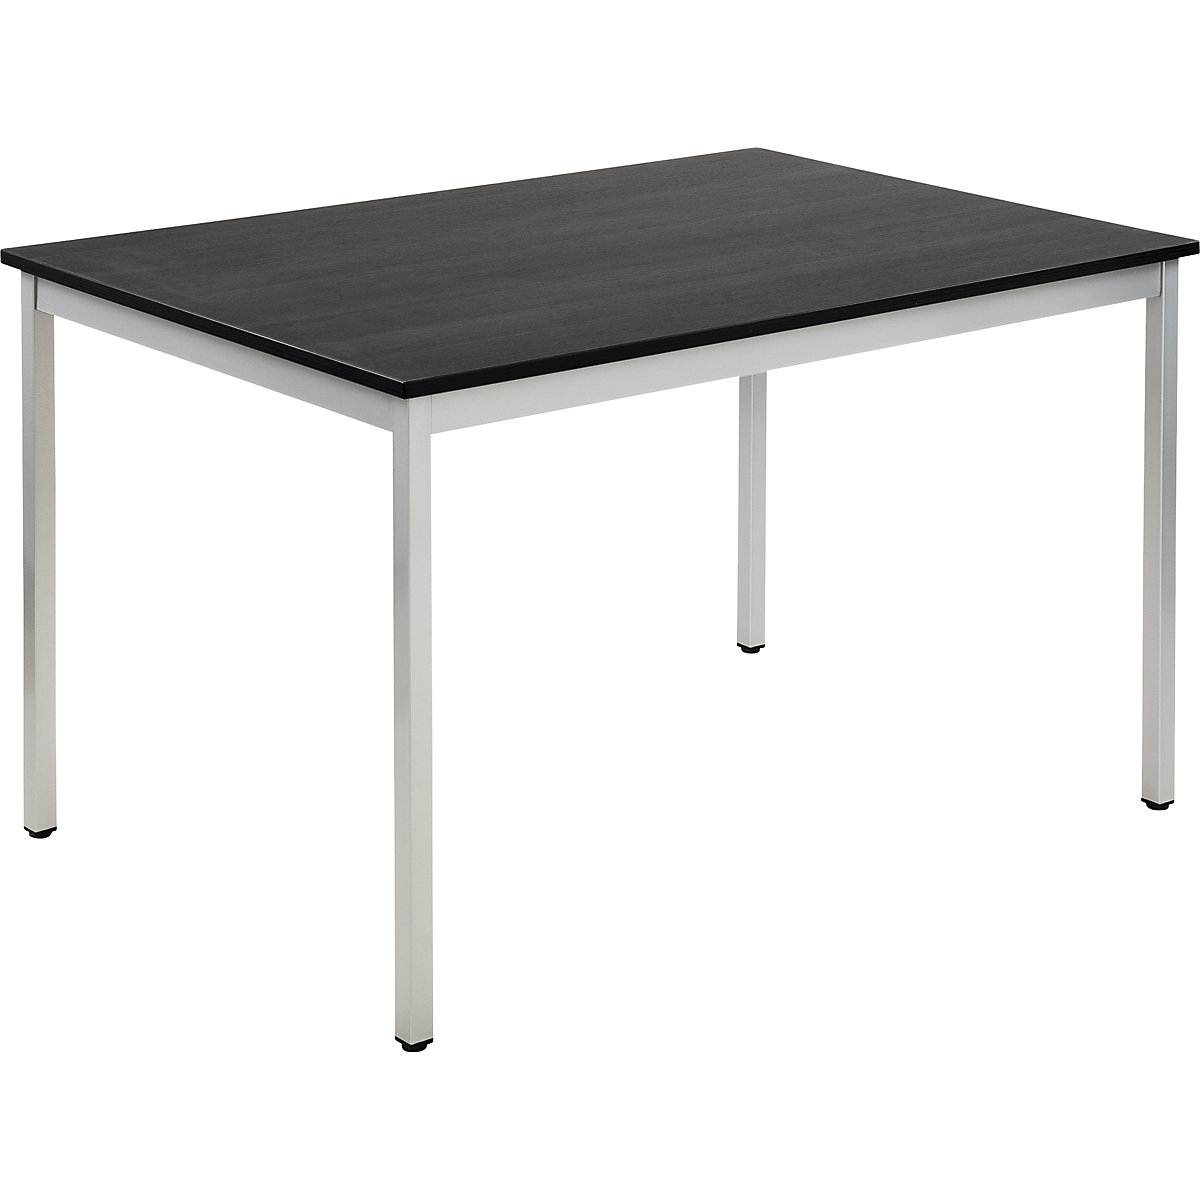 Multipurpose table – eurokraft basic, rectangular, WxH 1200 x 740 mm, depth 800 mm, ash finish tabletop in dark grey, white aluminium frame-19